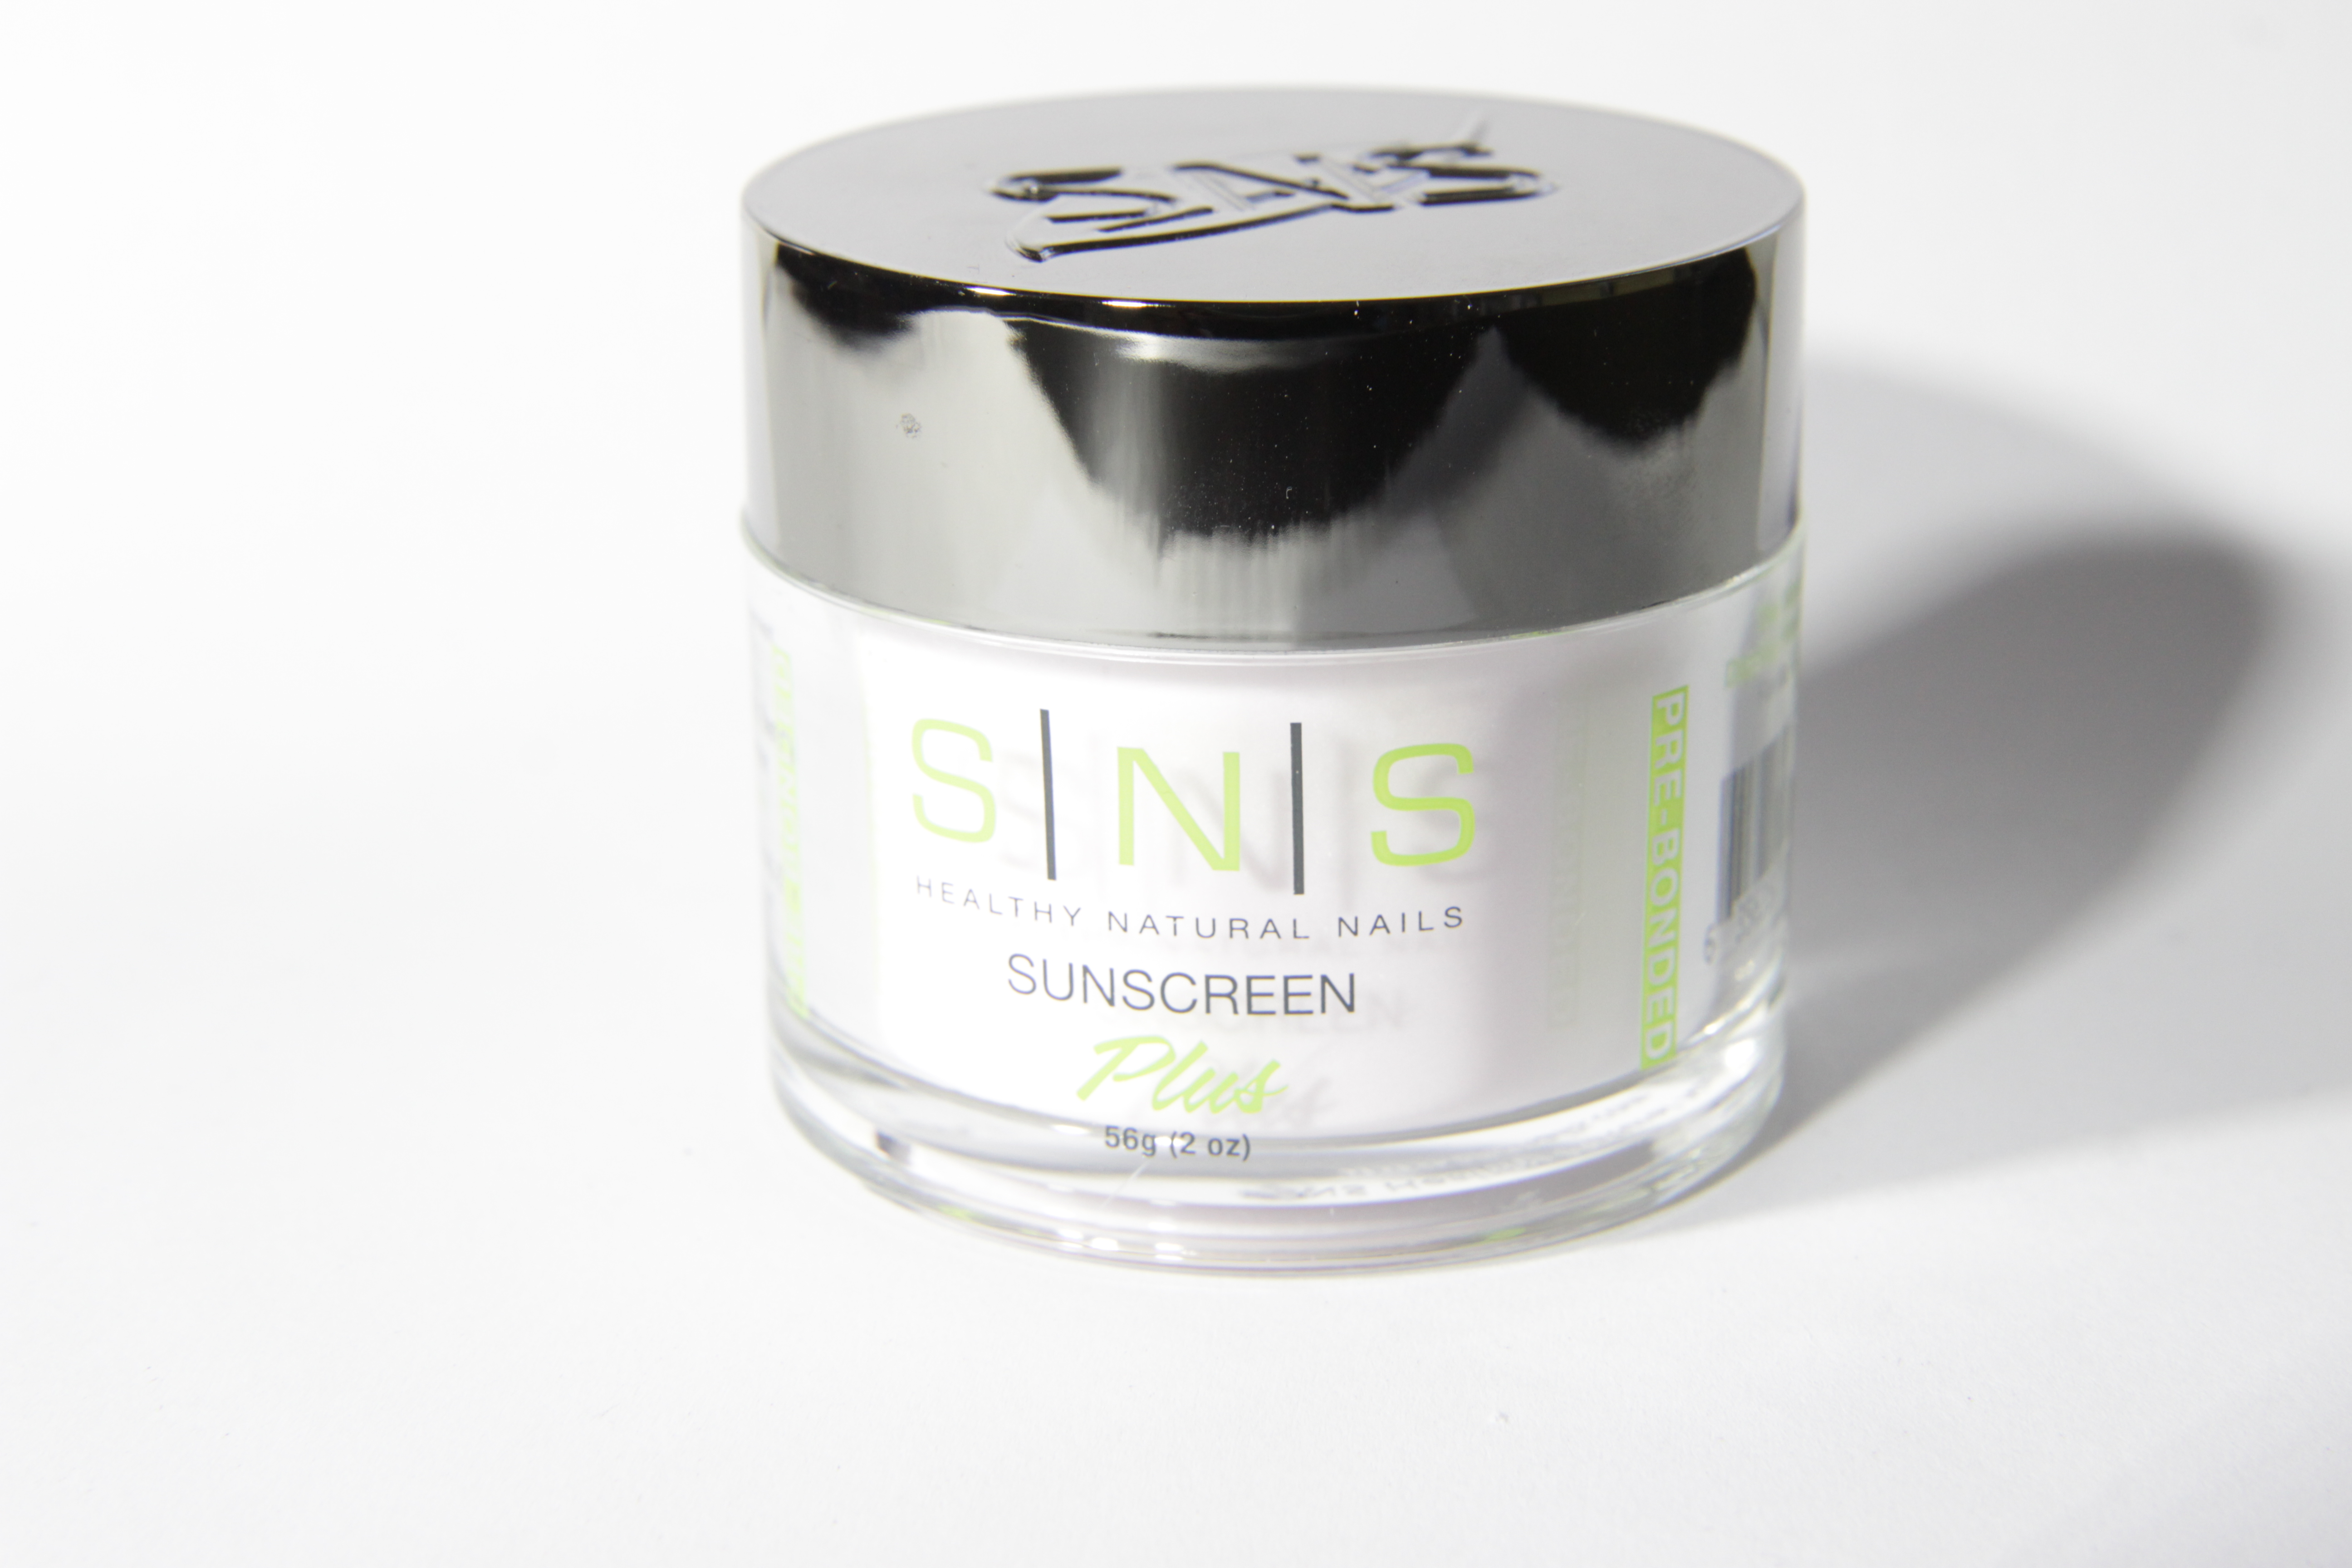  SNS Dip Powder Aufbaupulver Sunscreen  56g (2oz)